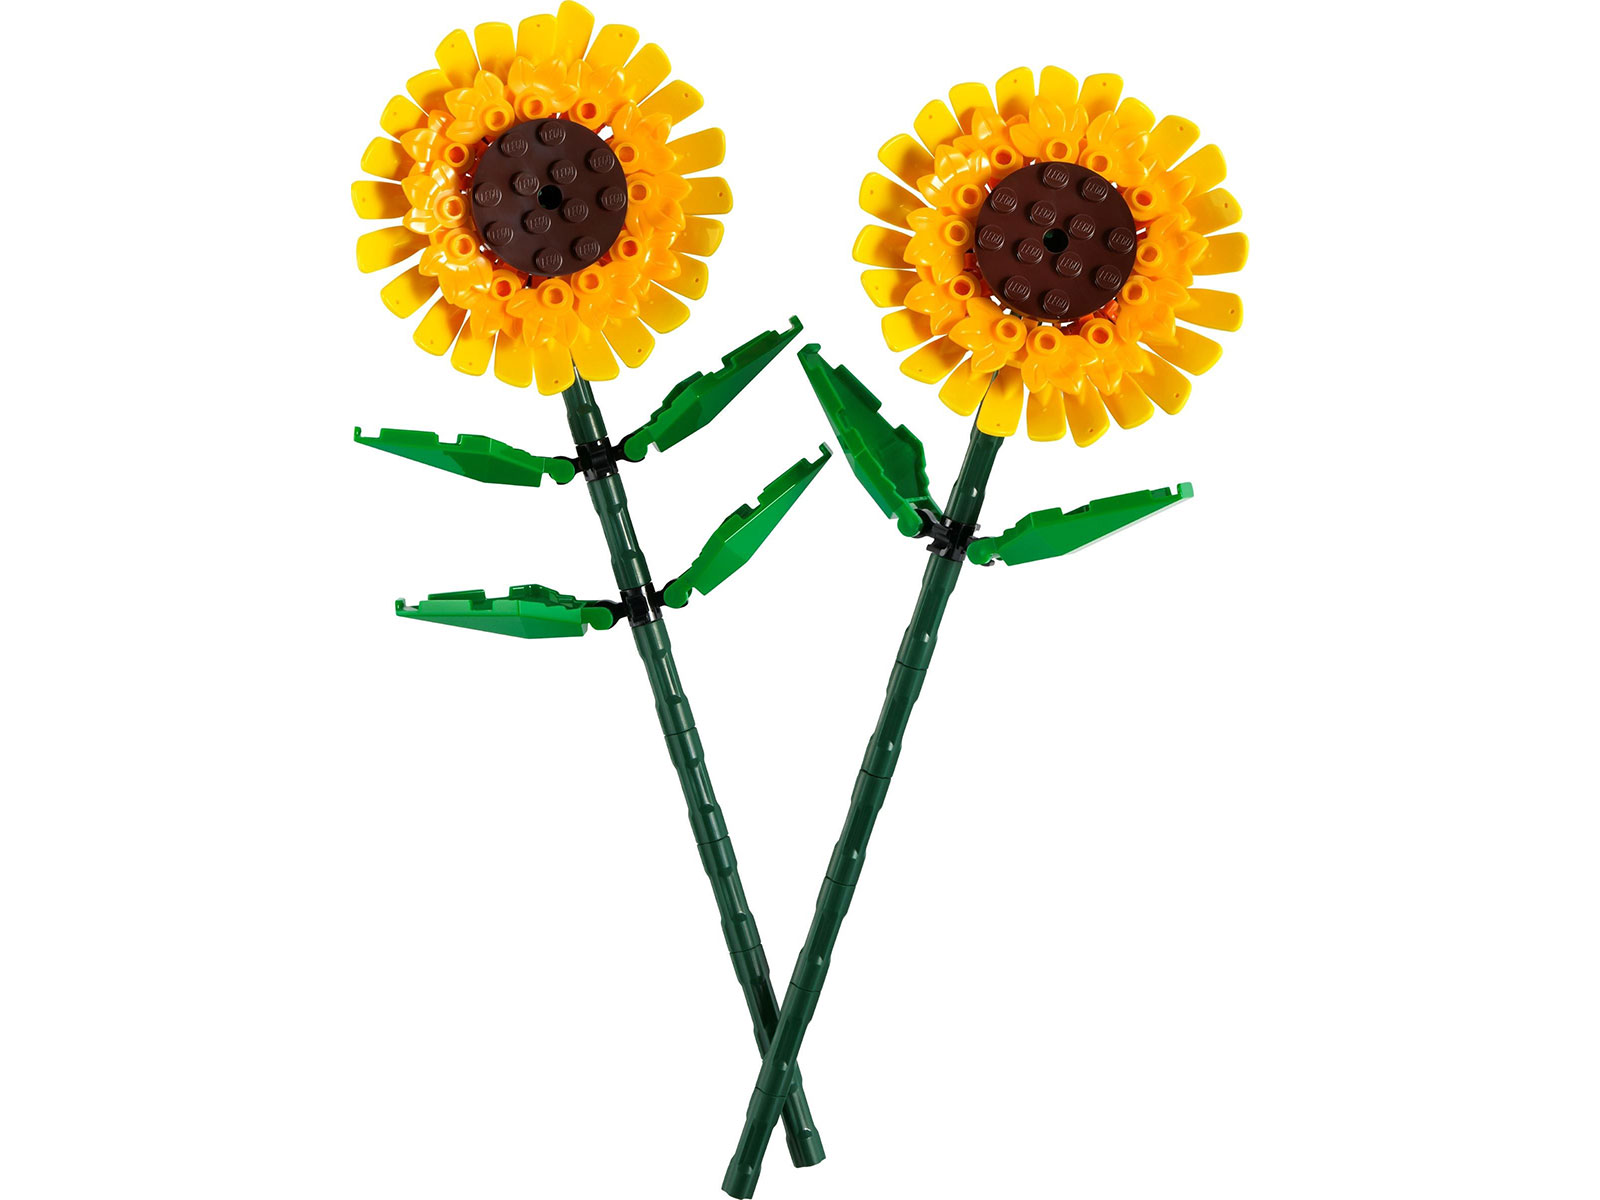 LEGO® Iconic 40524 - Sonnenblumen